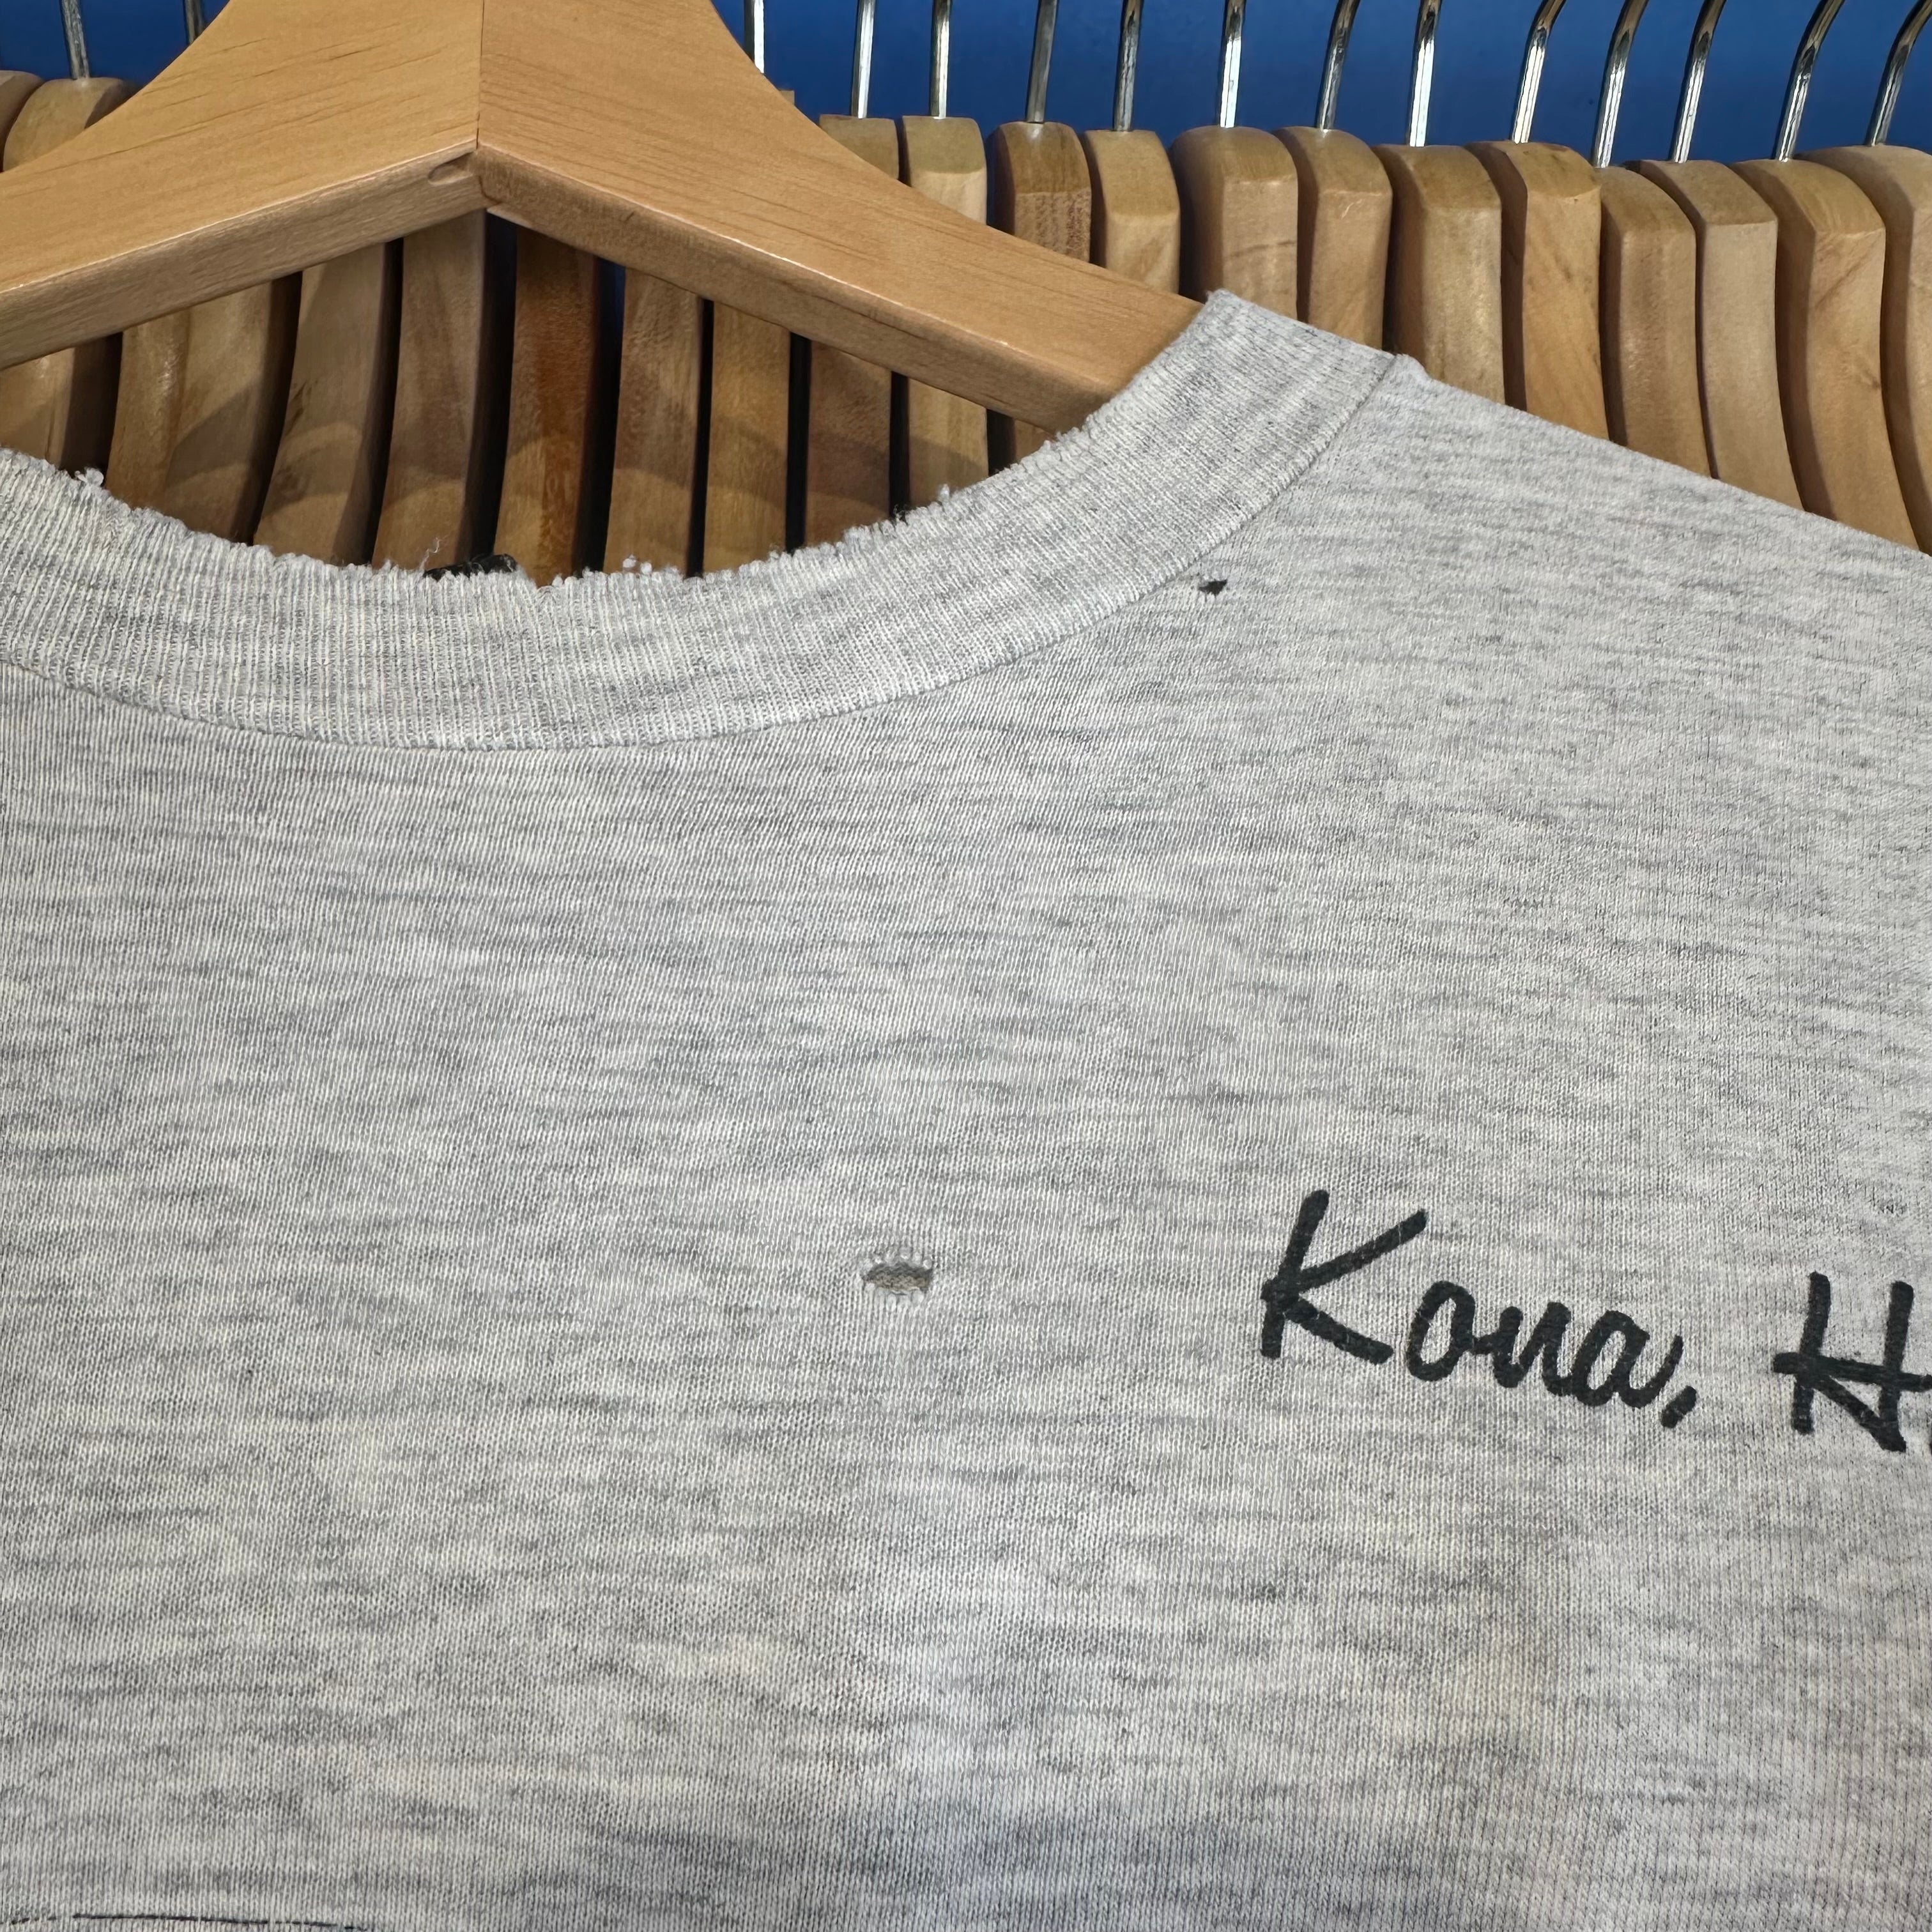 Kona, Hawaii Animals Live & Let Live T-Shirt